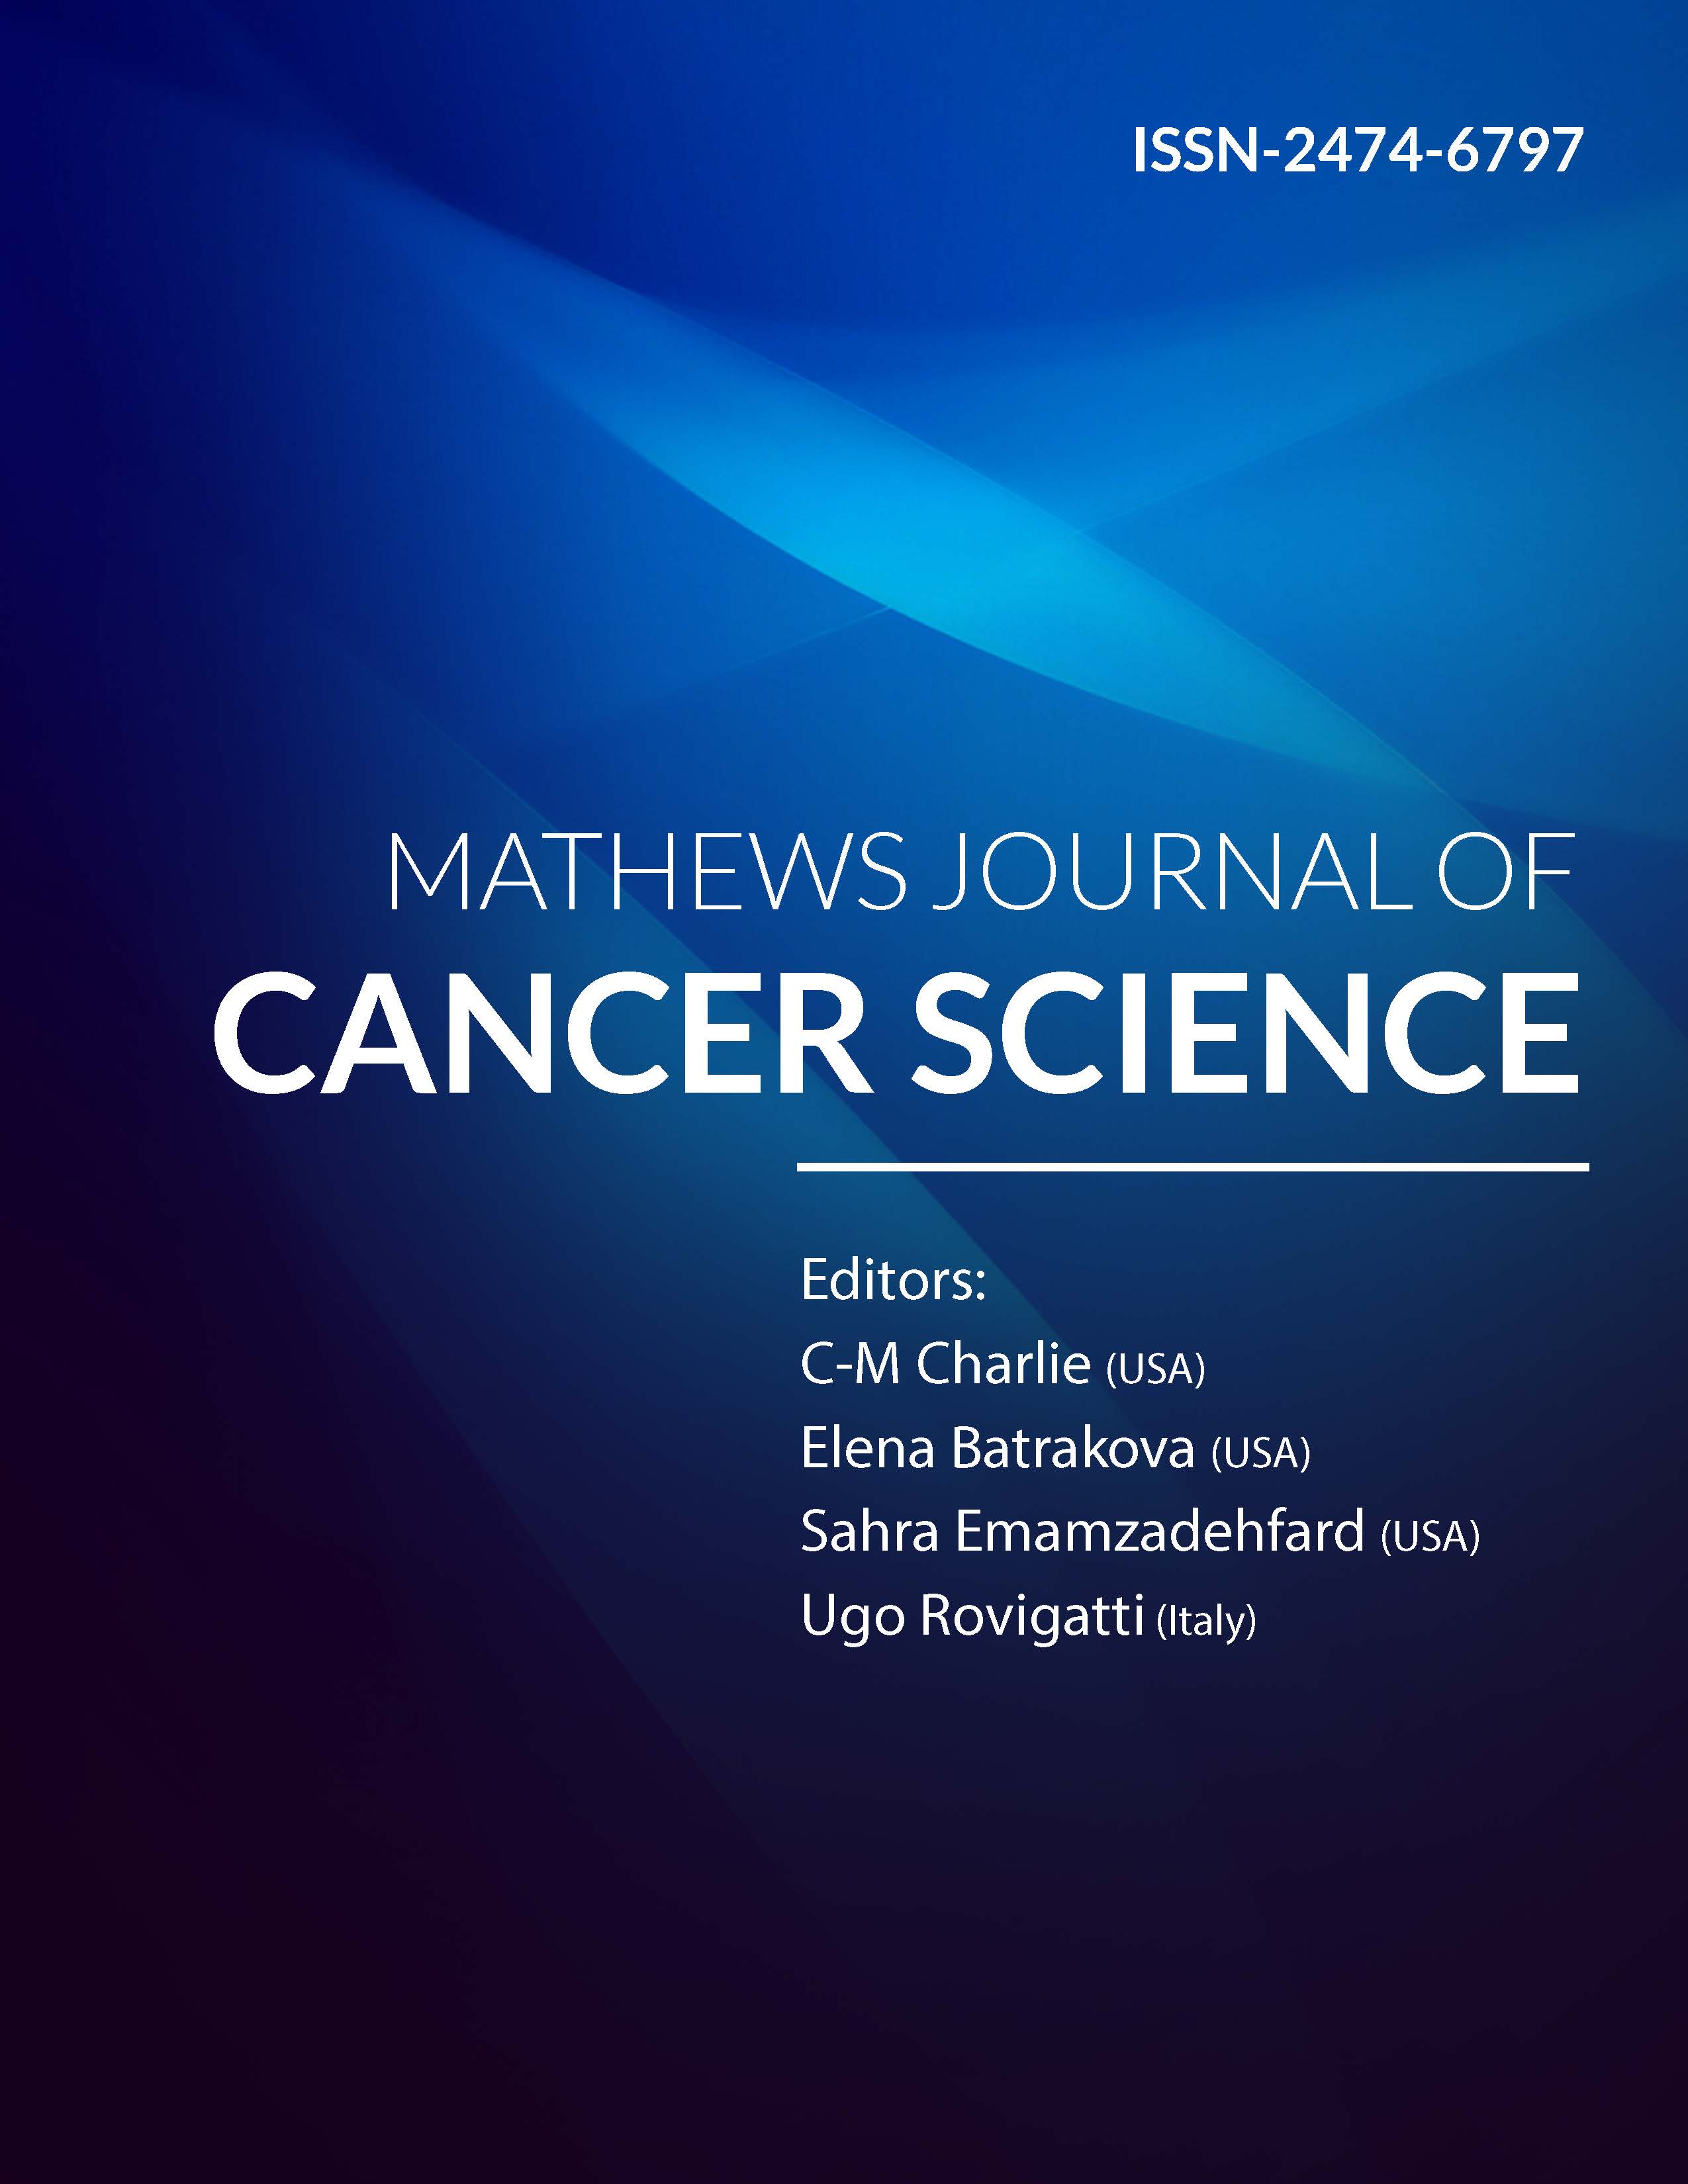 Mathews Journal of Cancer Science